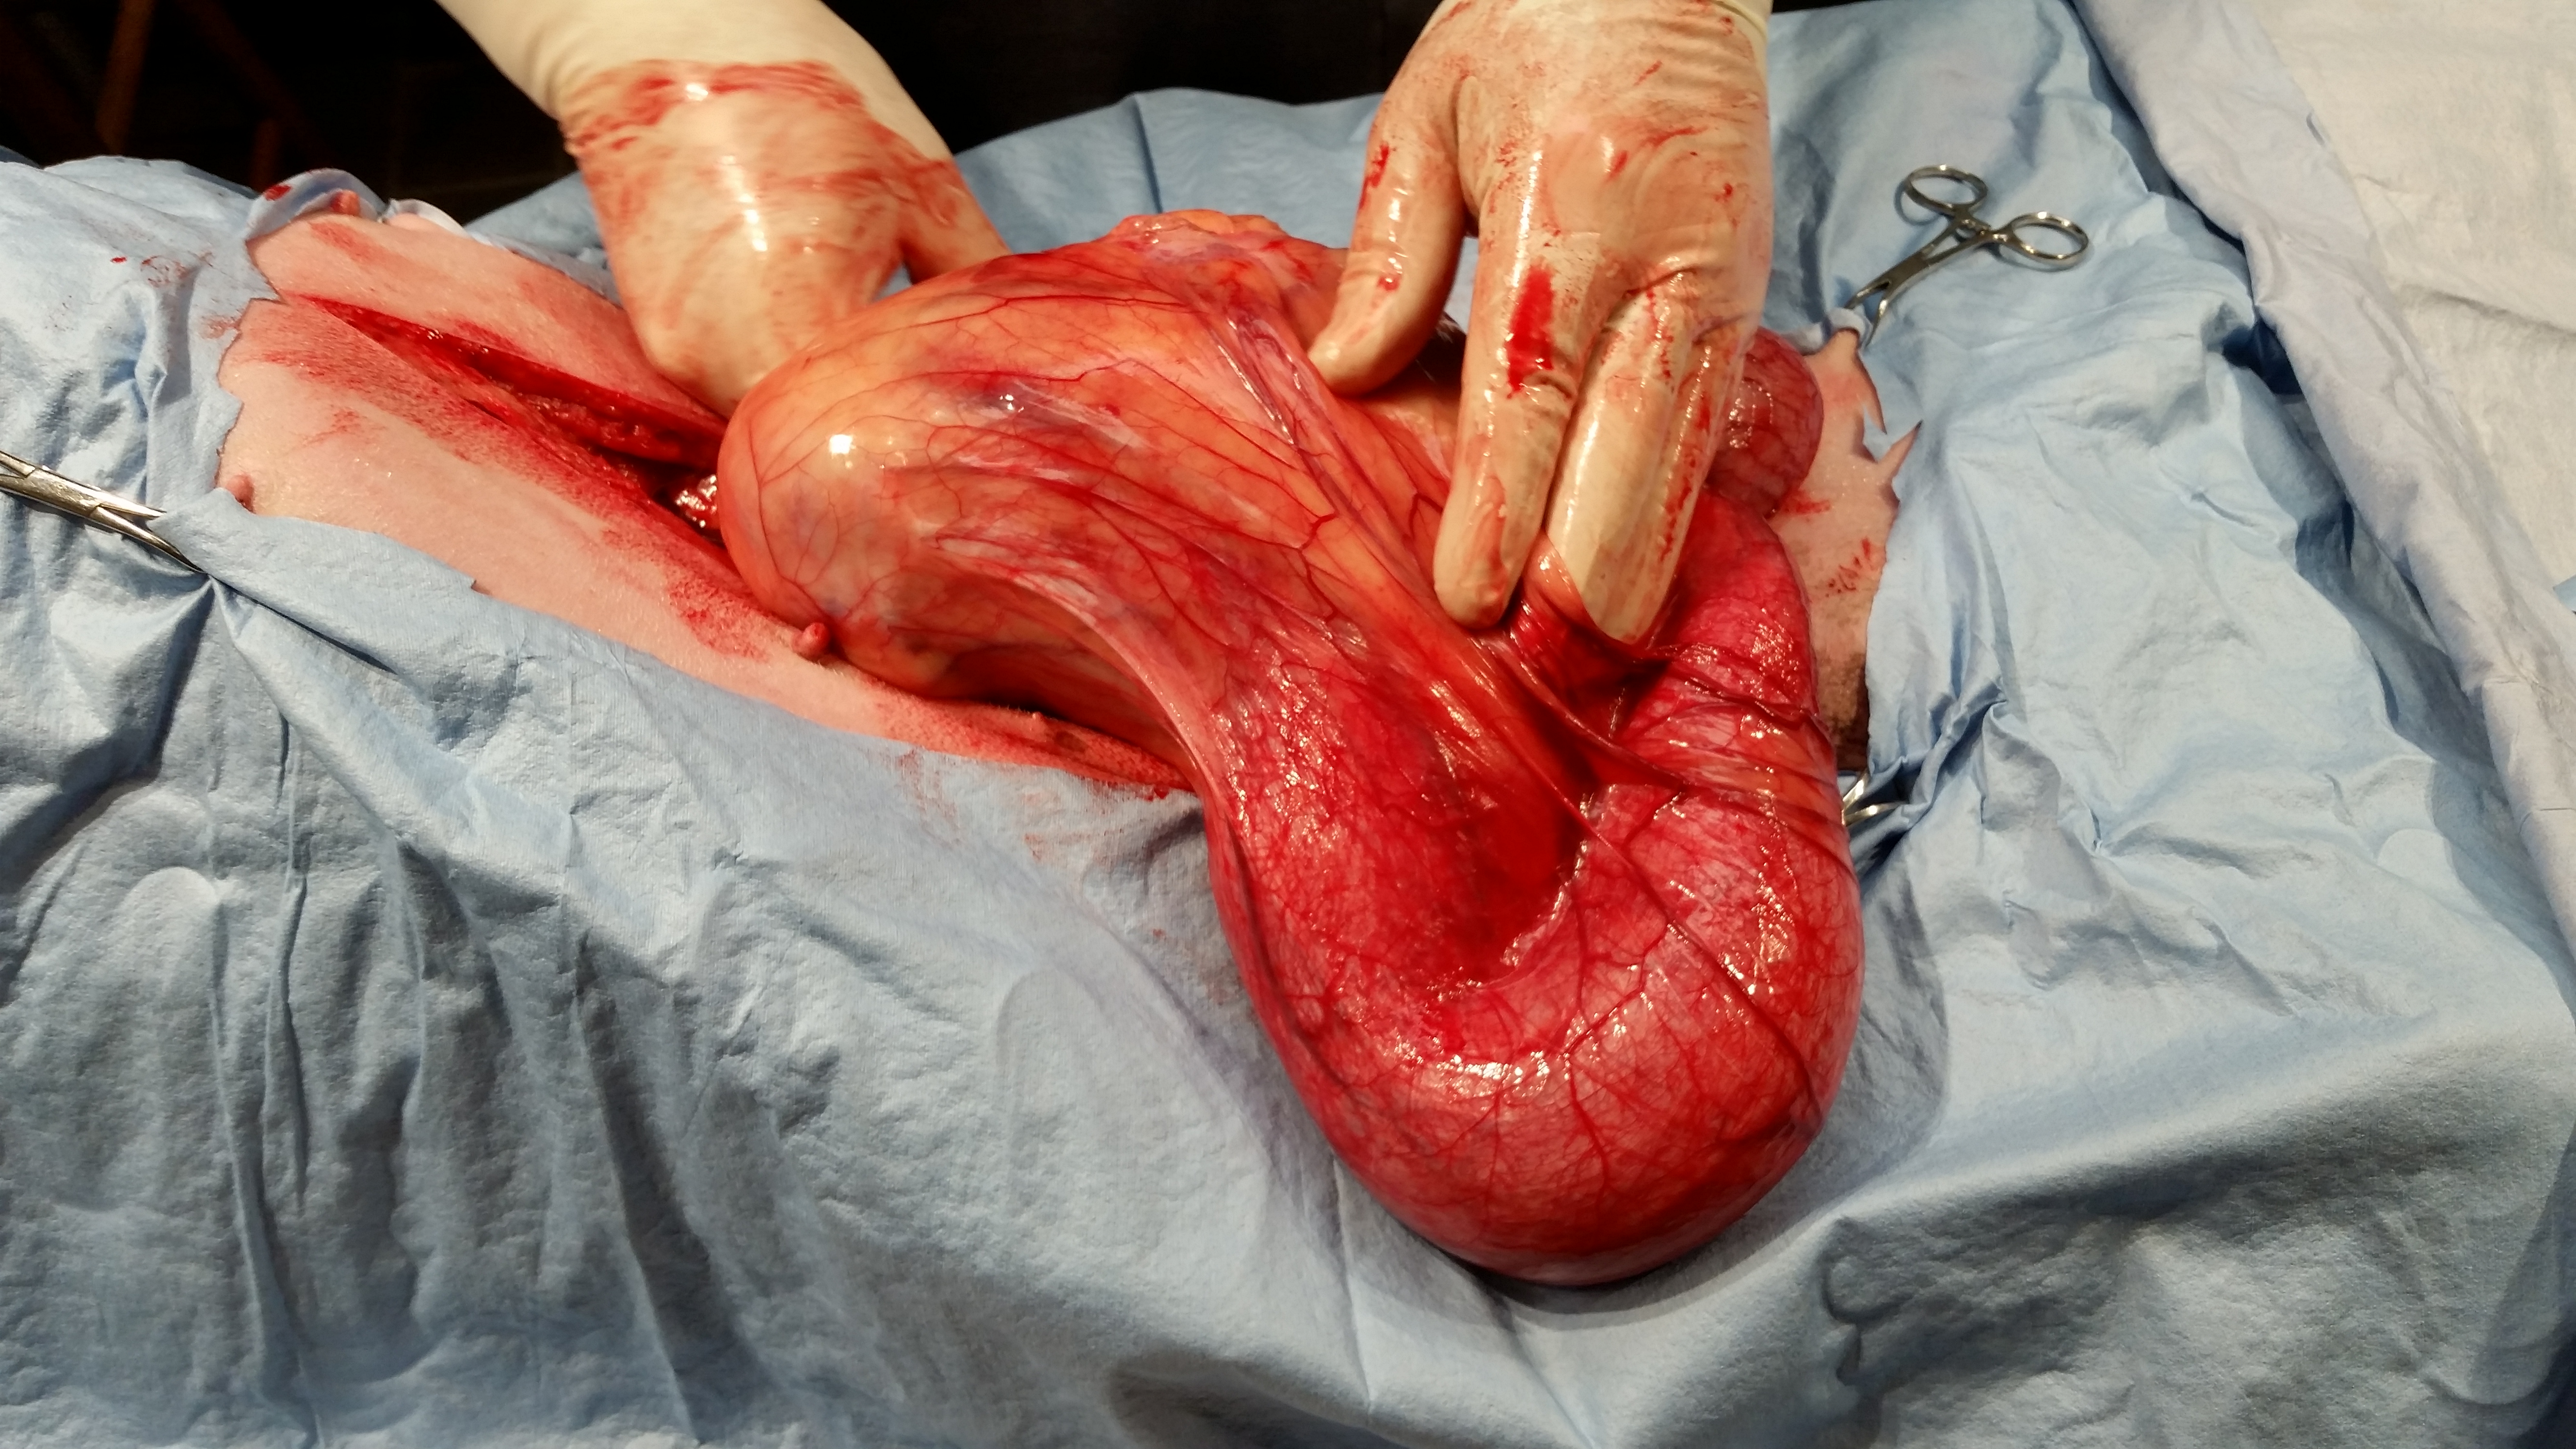 Hydronephrotic kidney and ureter